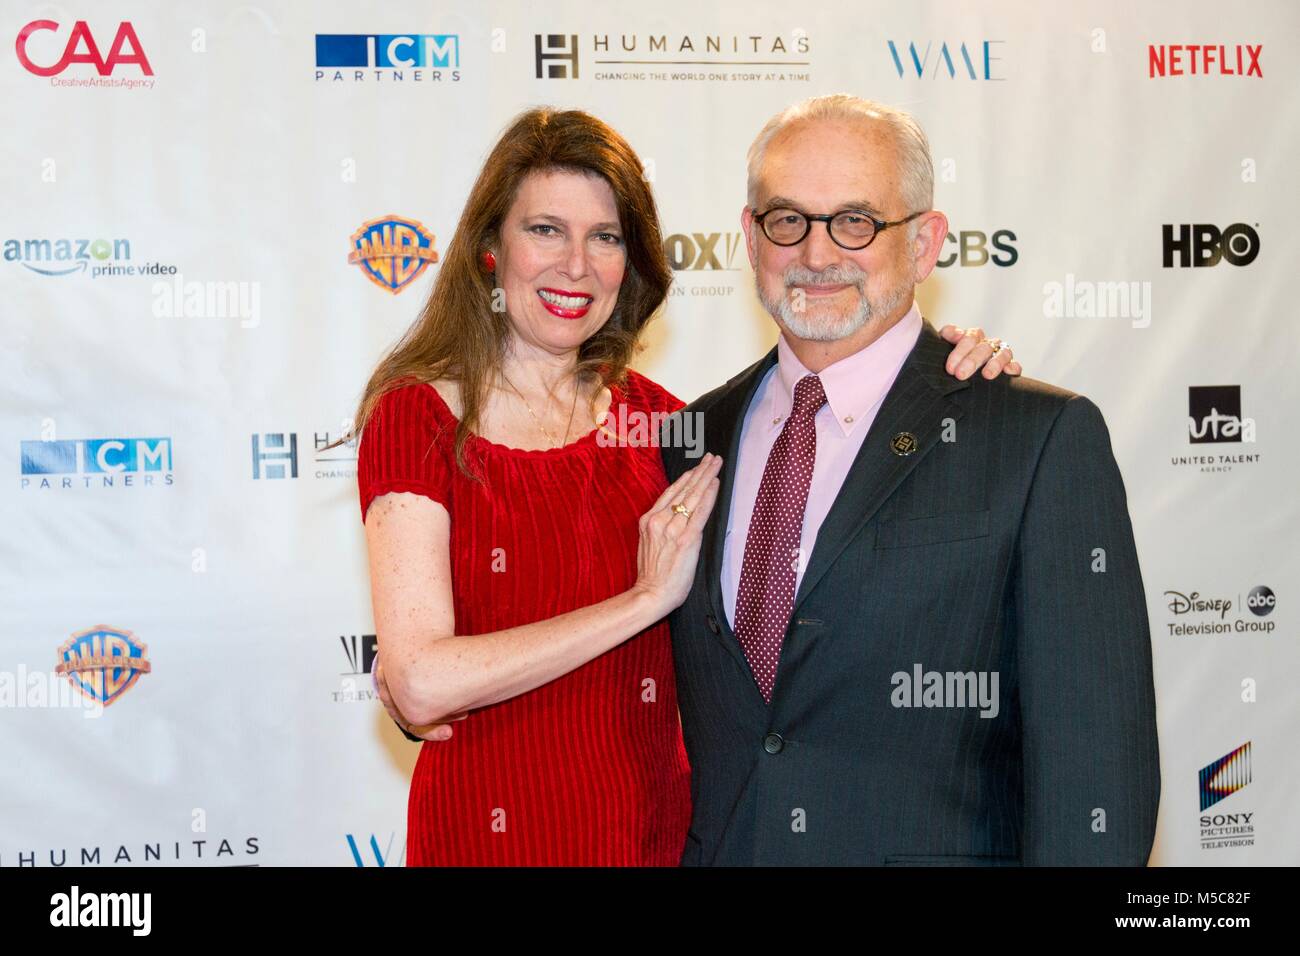 John Sacret Young and Wife at the Humanitas awards 2018 Stock Photo